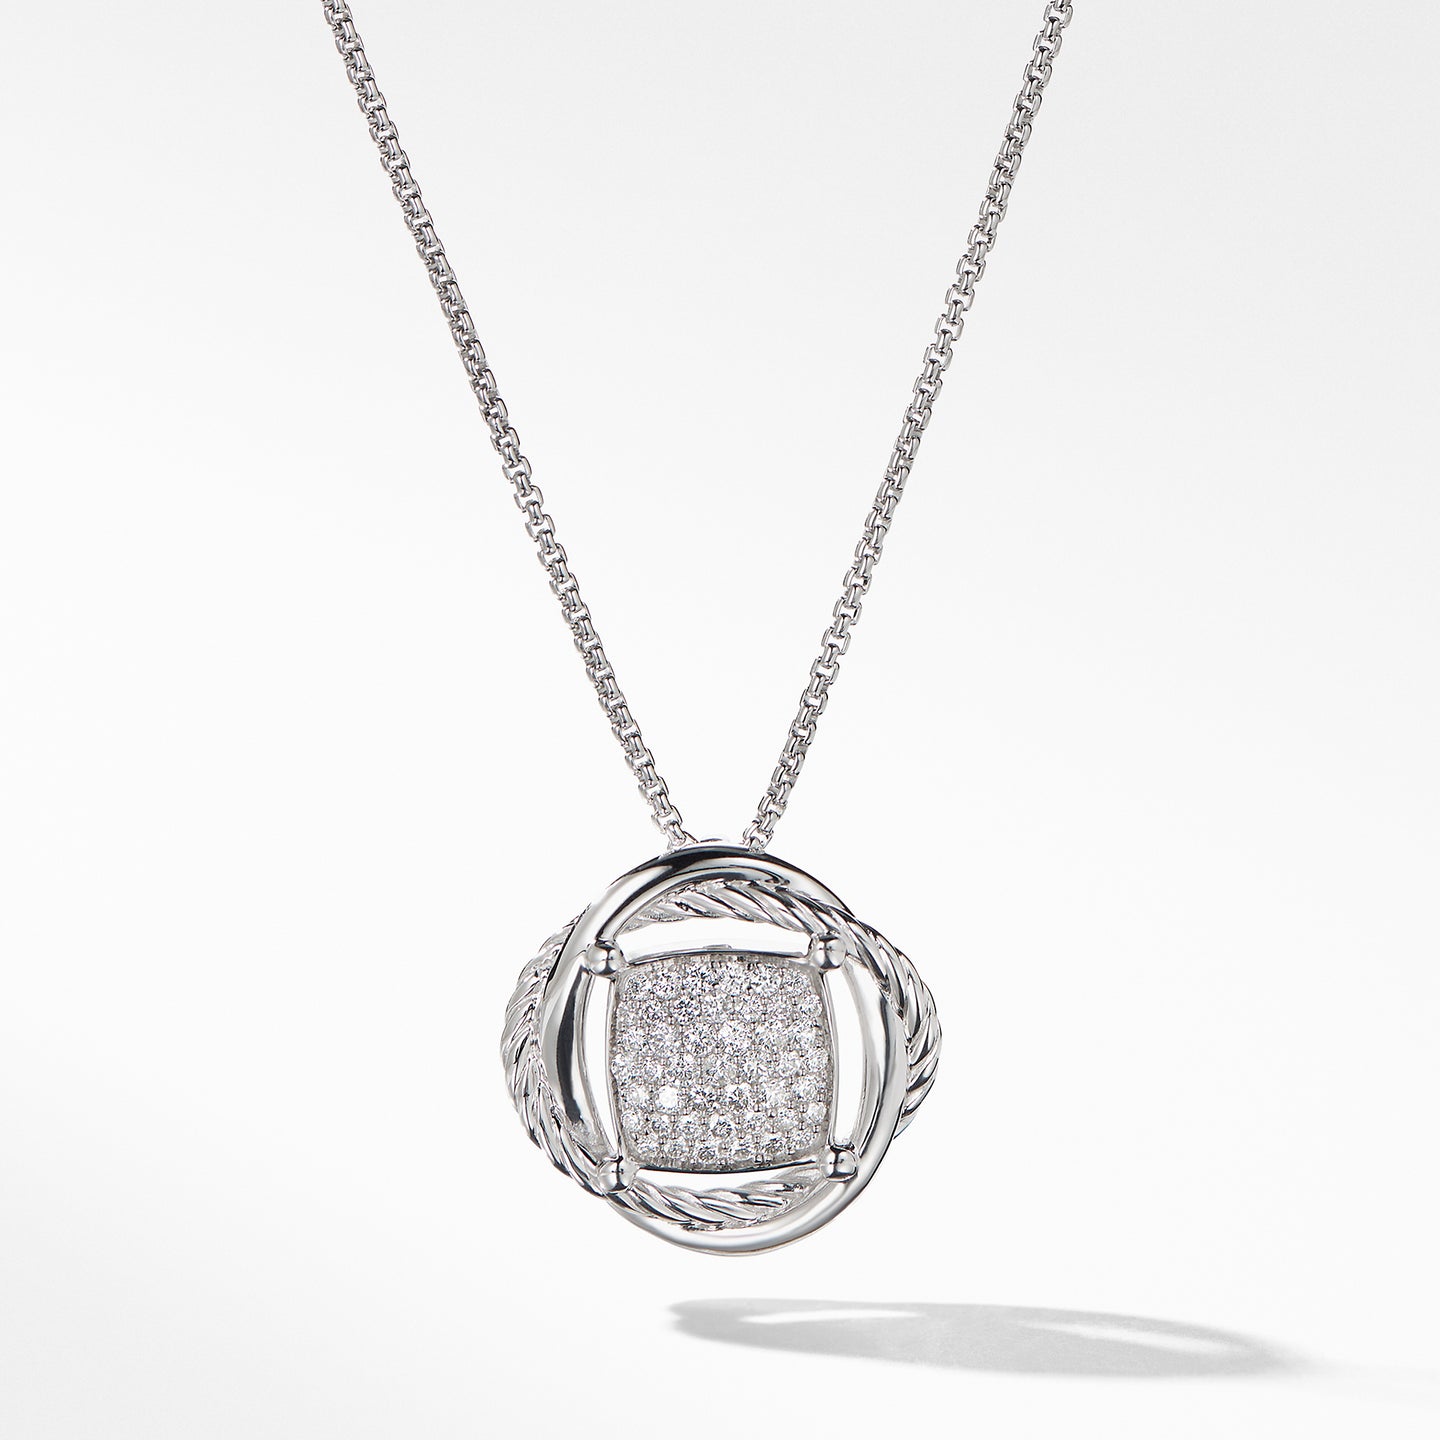 David Yurman Infinity Small Pendant Necklace with Diamonds